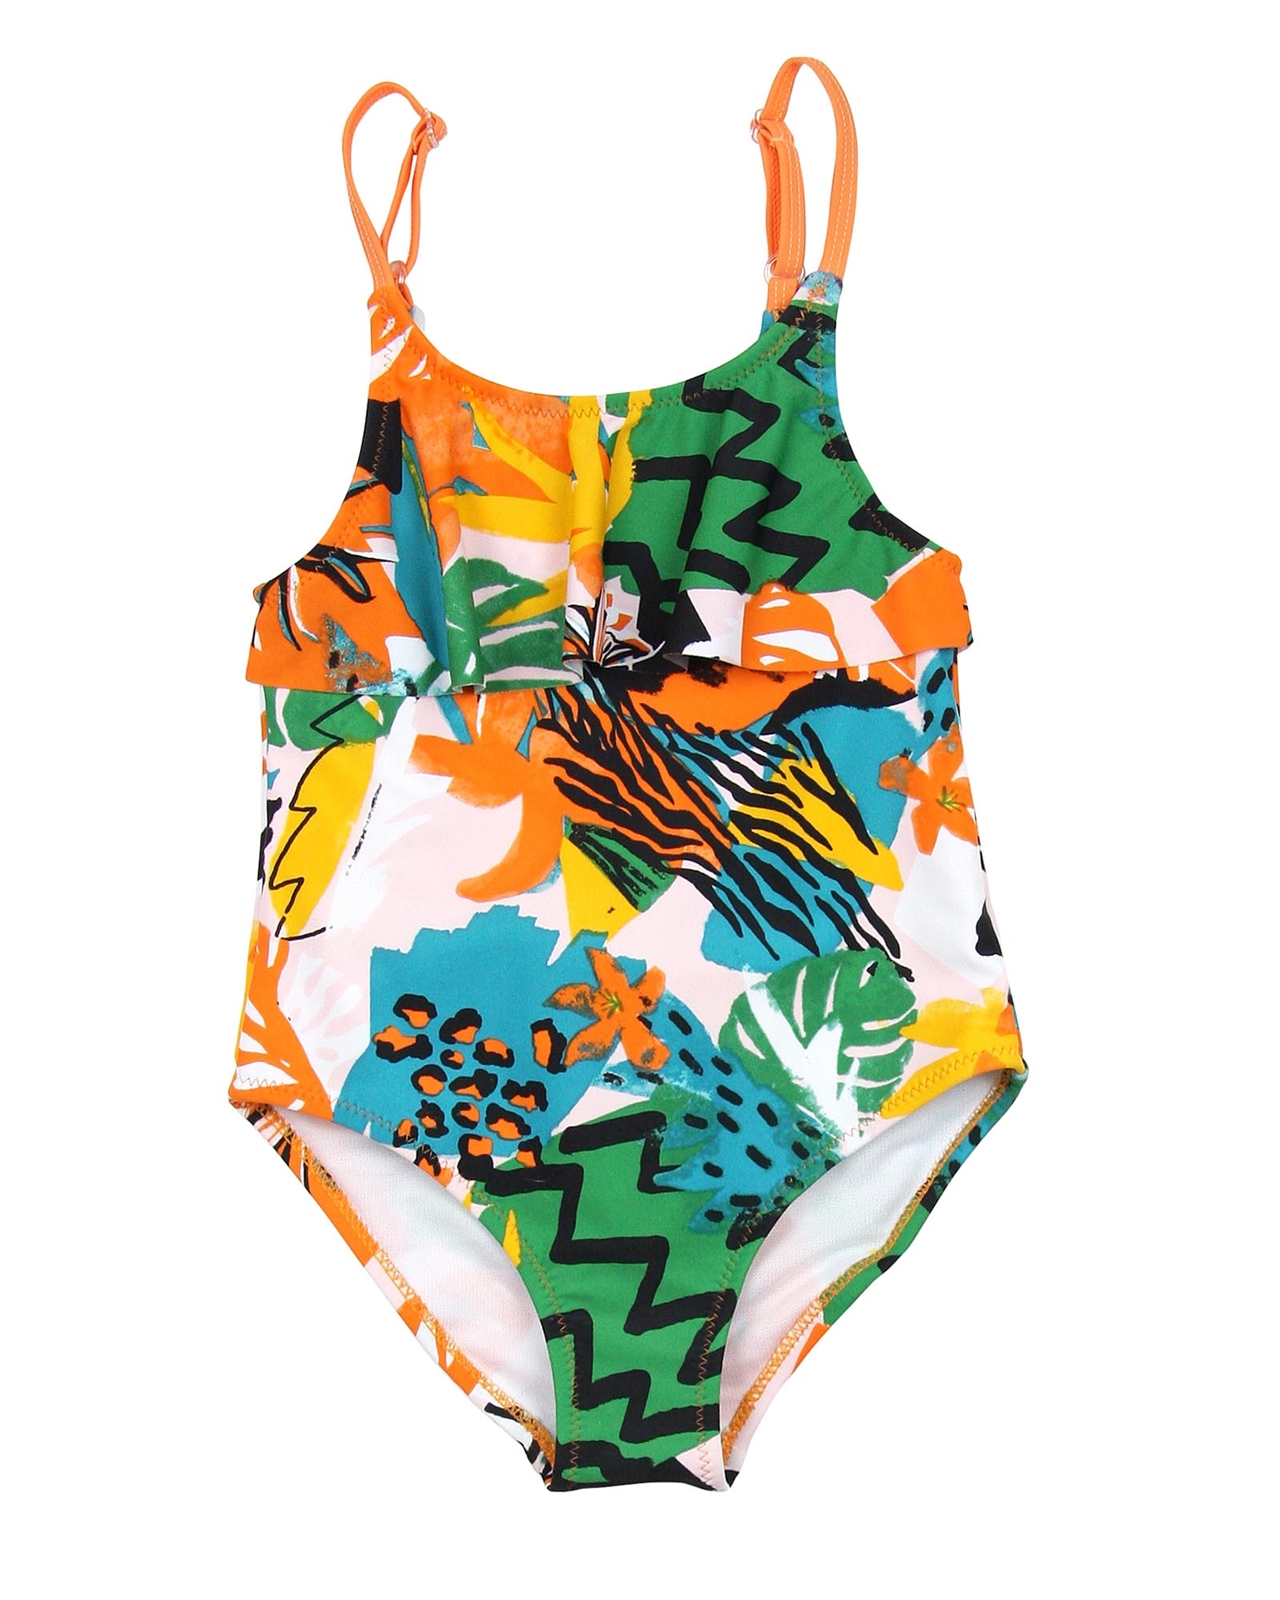 Tuc Tuc Girl's Swimsuit in Jungle Print - Tuc Tuc - Tuc Tuc Spring ...